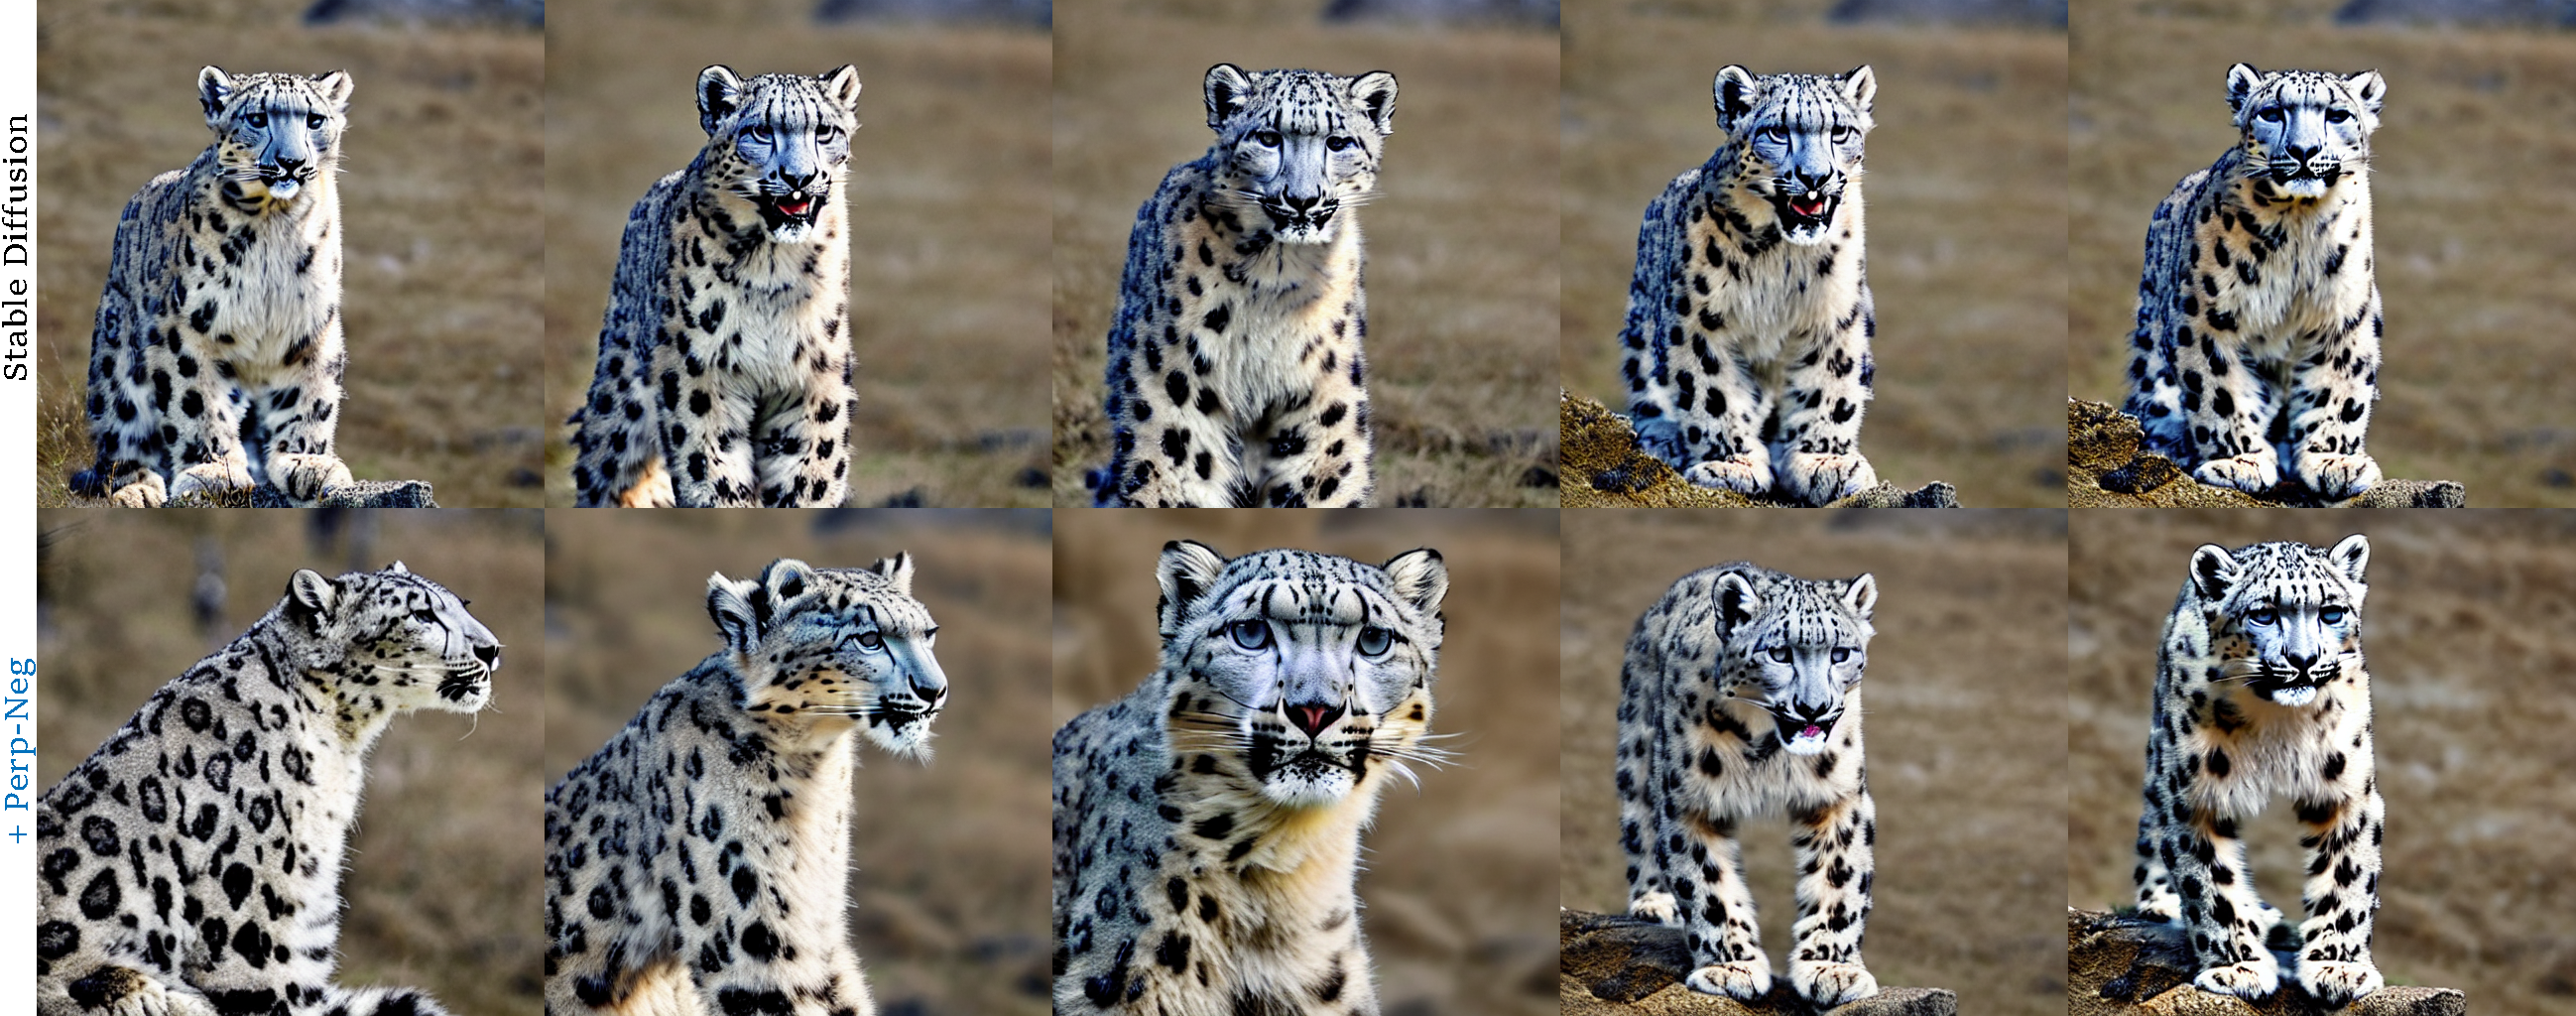 2d-view-interpolation-leopard.